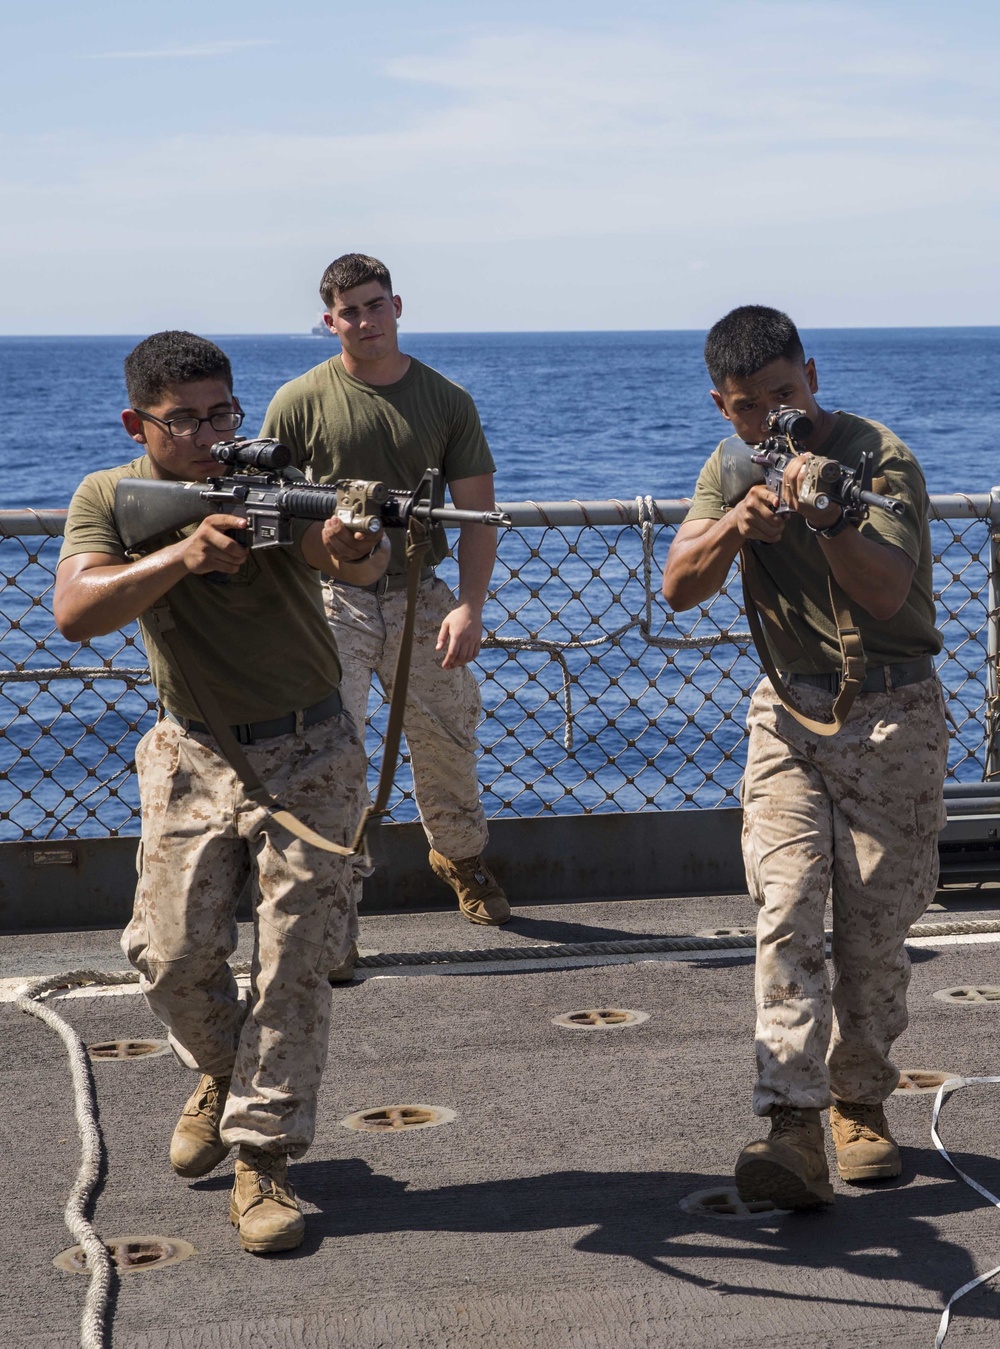 U.S. Marines embark on the USNS Sacagawea to begin Exercise Koa Moana 15.2